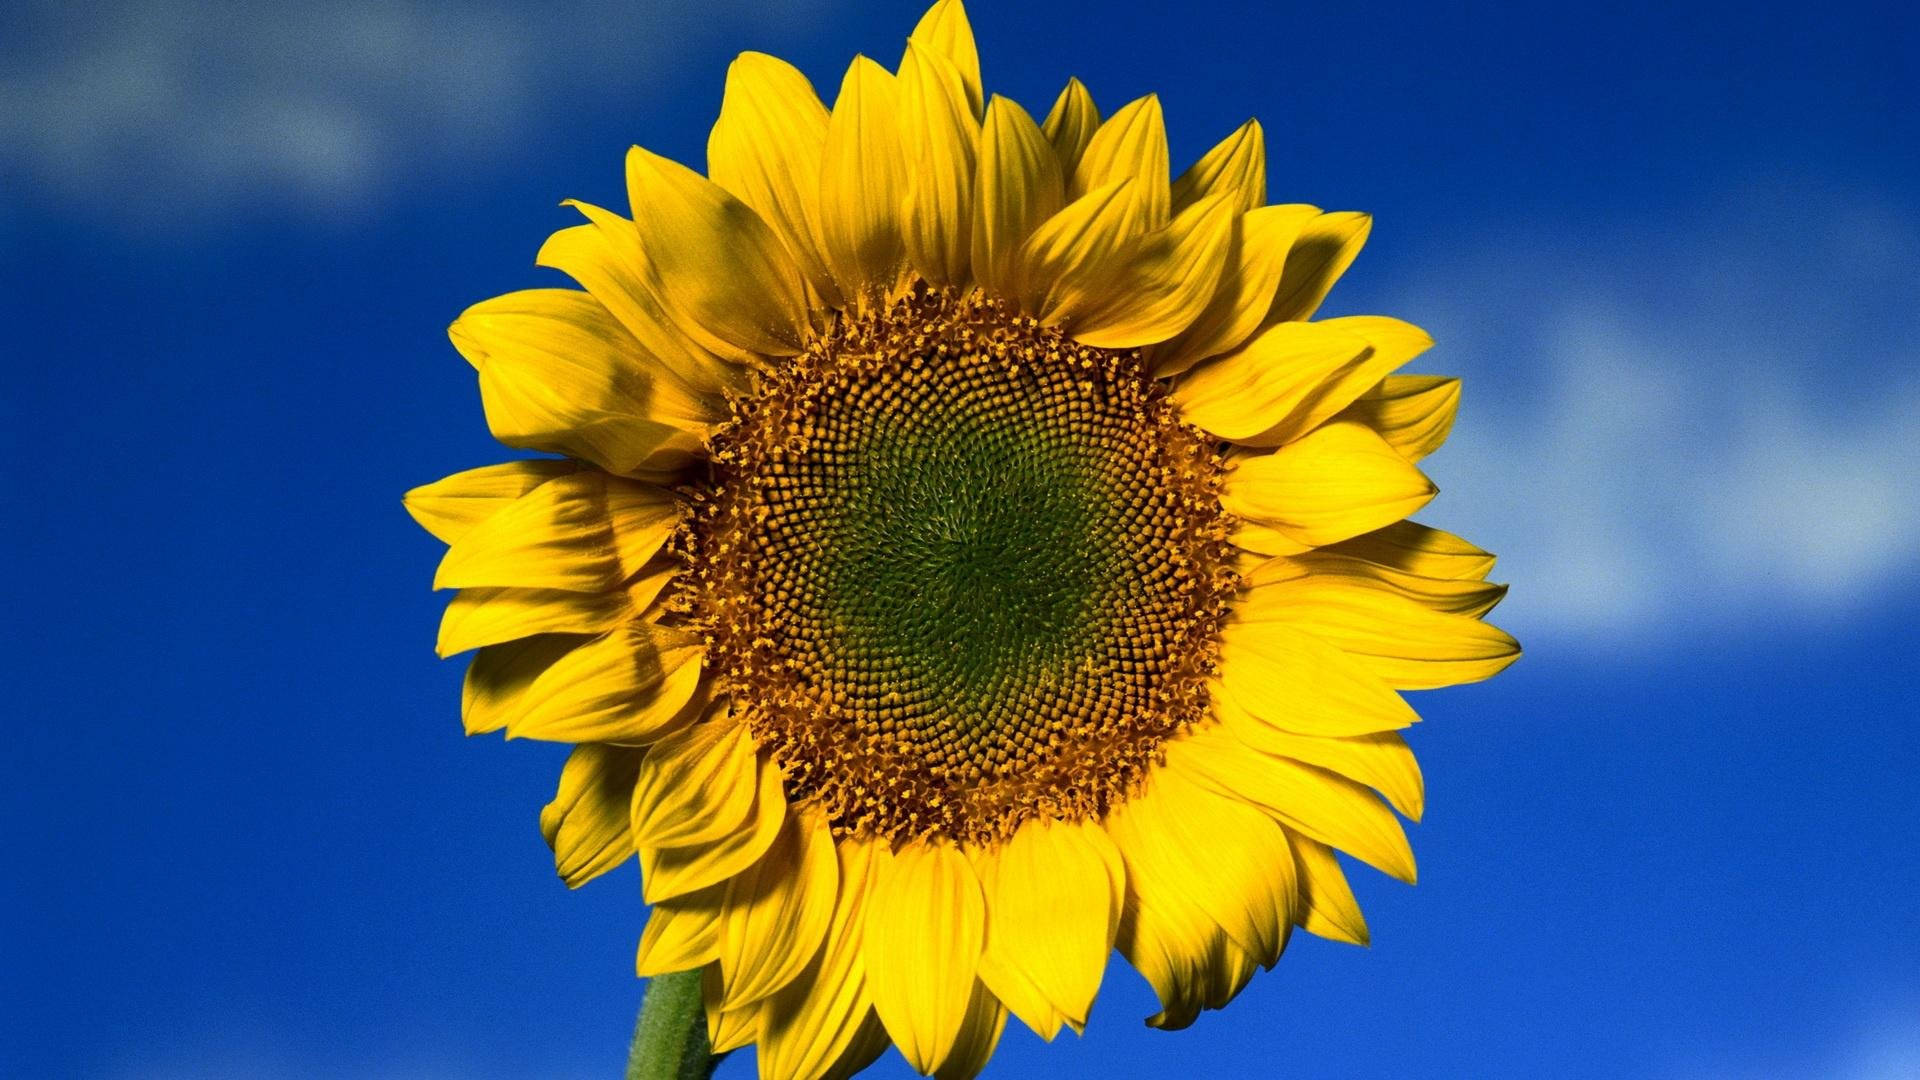 A Colorful Sunflower Providing a Bright Desktop Background Wallpaper